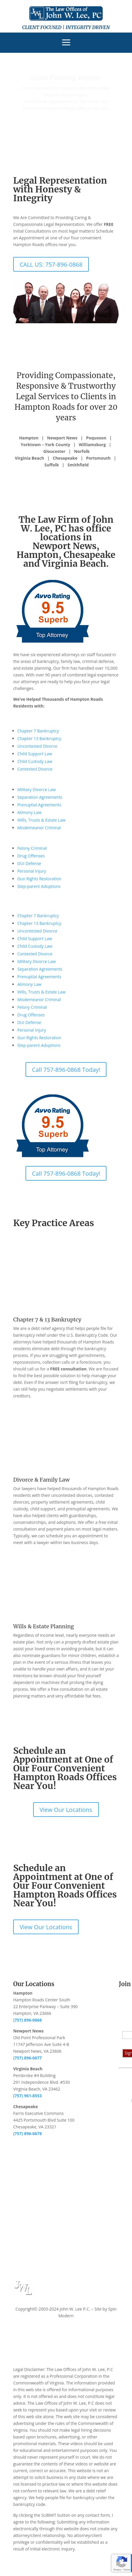 The Law Firm of John W. Lee, P.C. - Hampton VA Lawyers